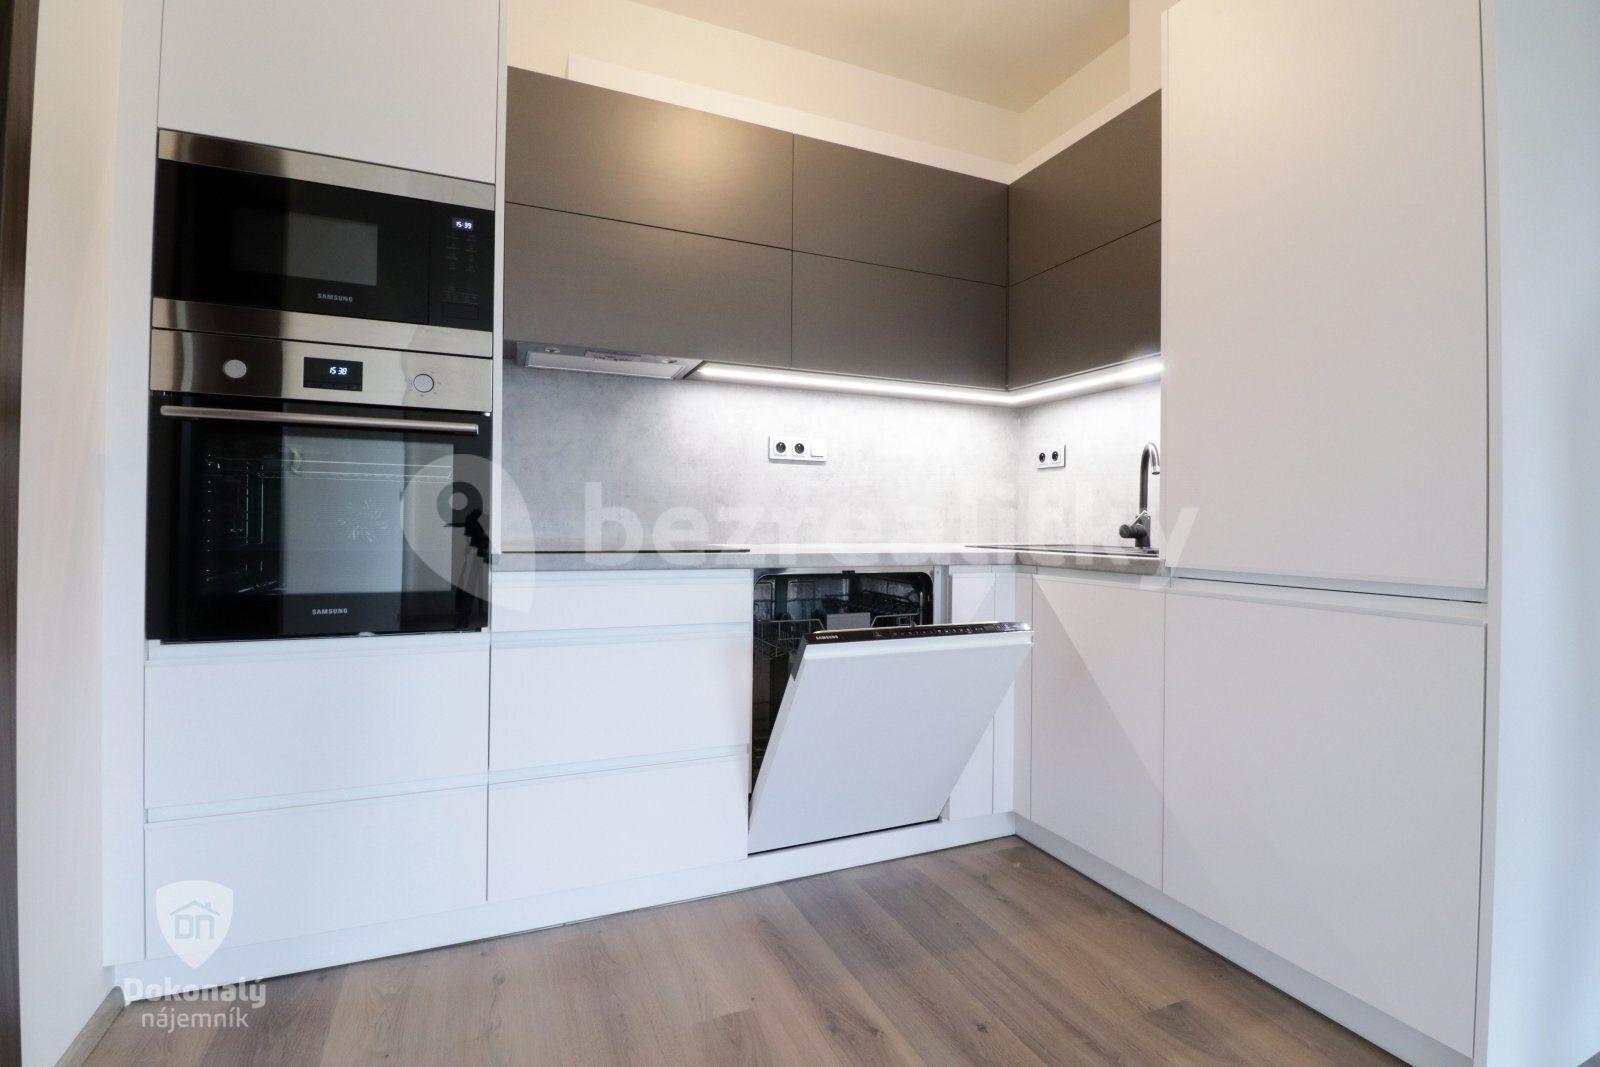 1 bedroom with open-plan kitchen flat to rent, 57 m², Hrašeho, Prague, Prague